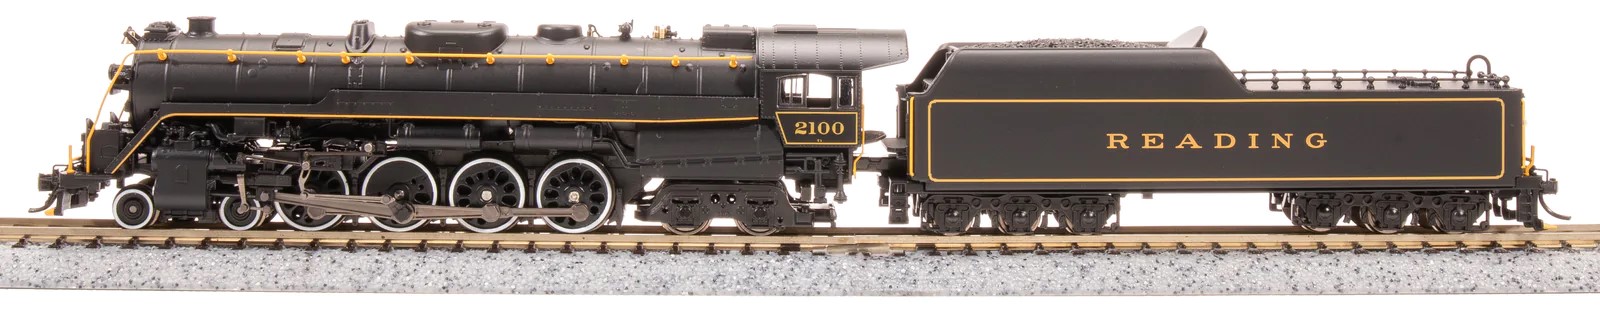 Broadway Limited Imports N 7403 Reading Class T-1 4-8-4 Locomotive Paragon4 Sound/DC/DCC/Smoke 'Iron Horse Rambles Excursion Version' RDG #2100